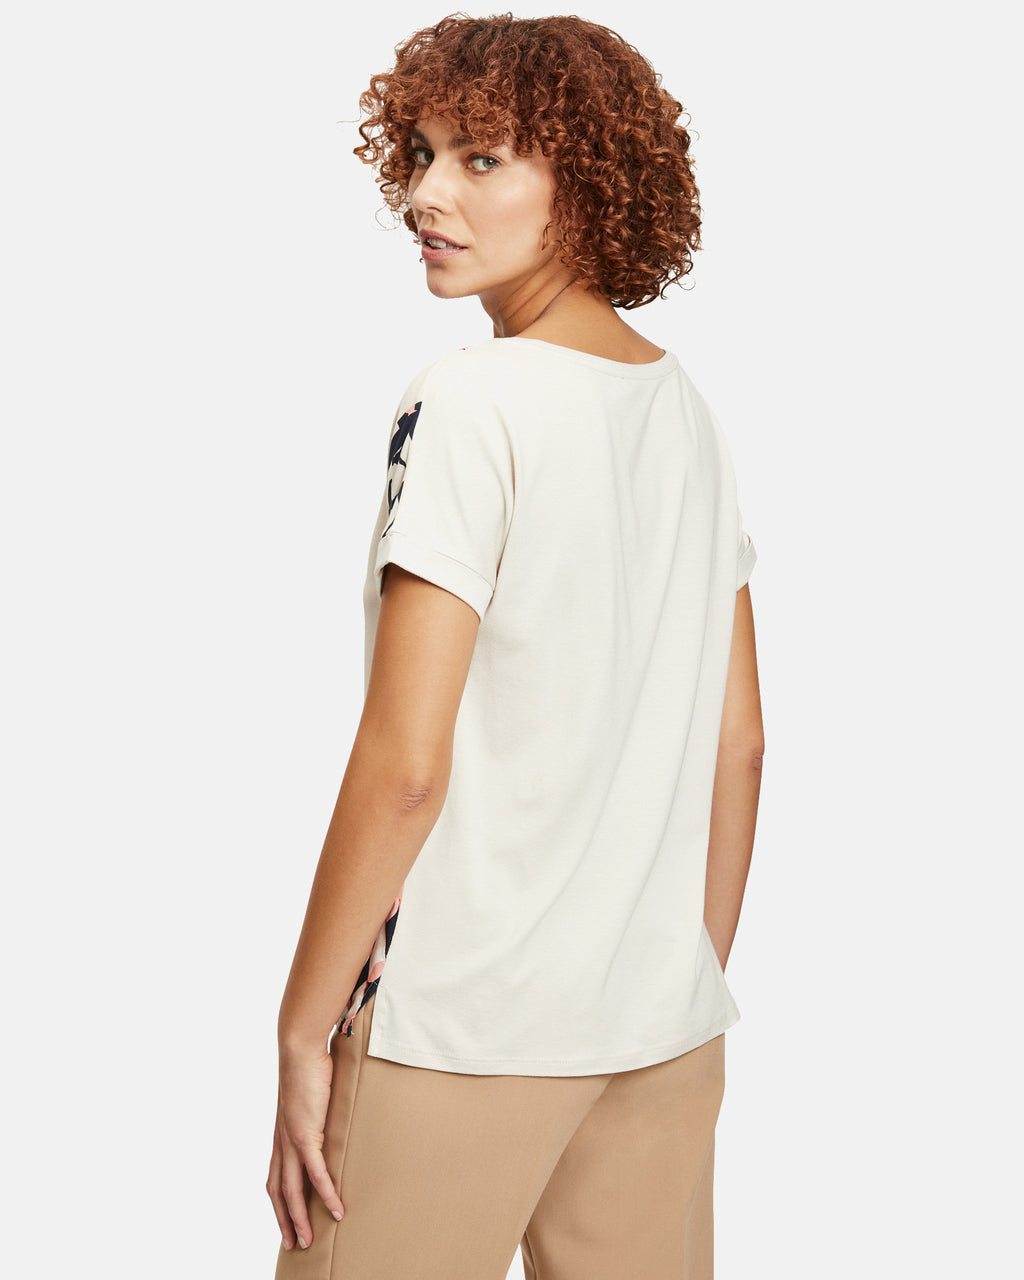 Multi-Color Shirt Short 1/2 Sleeve